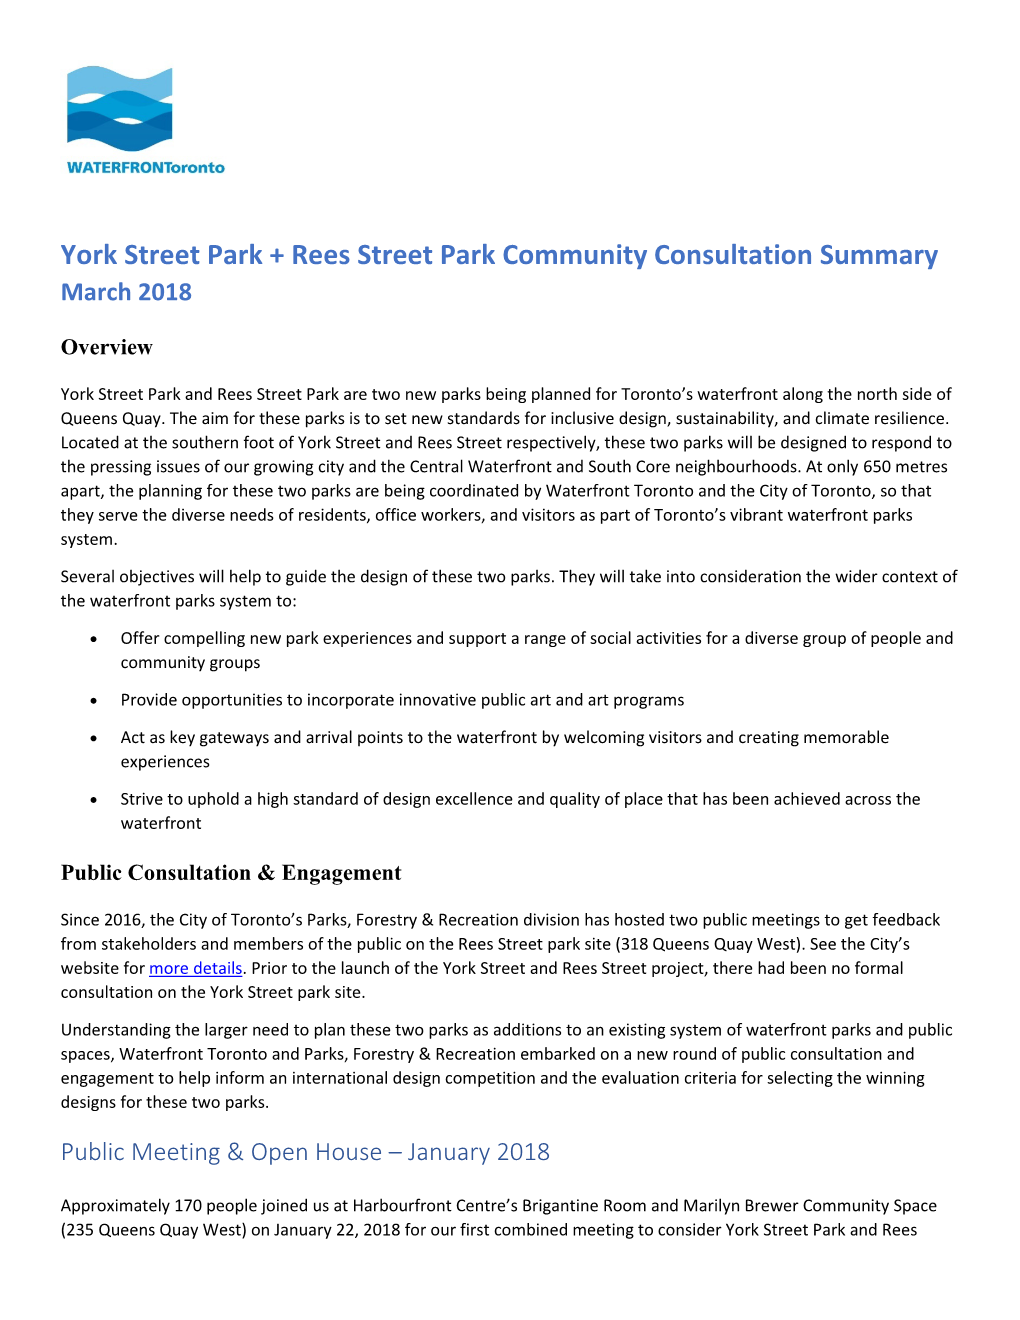 York Street Park + Rees Street Park Community Consultation Summary March 2018